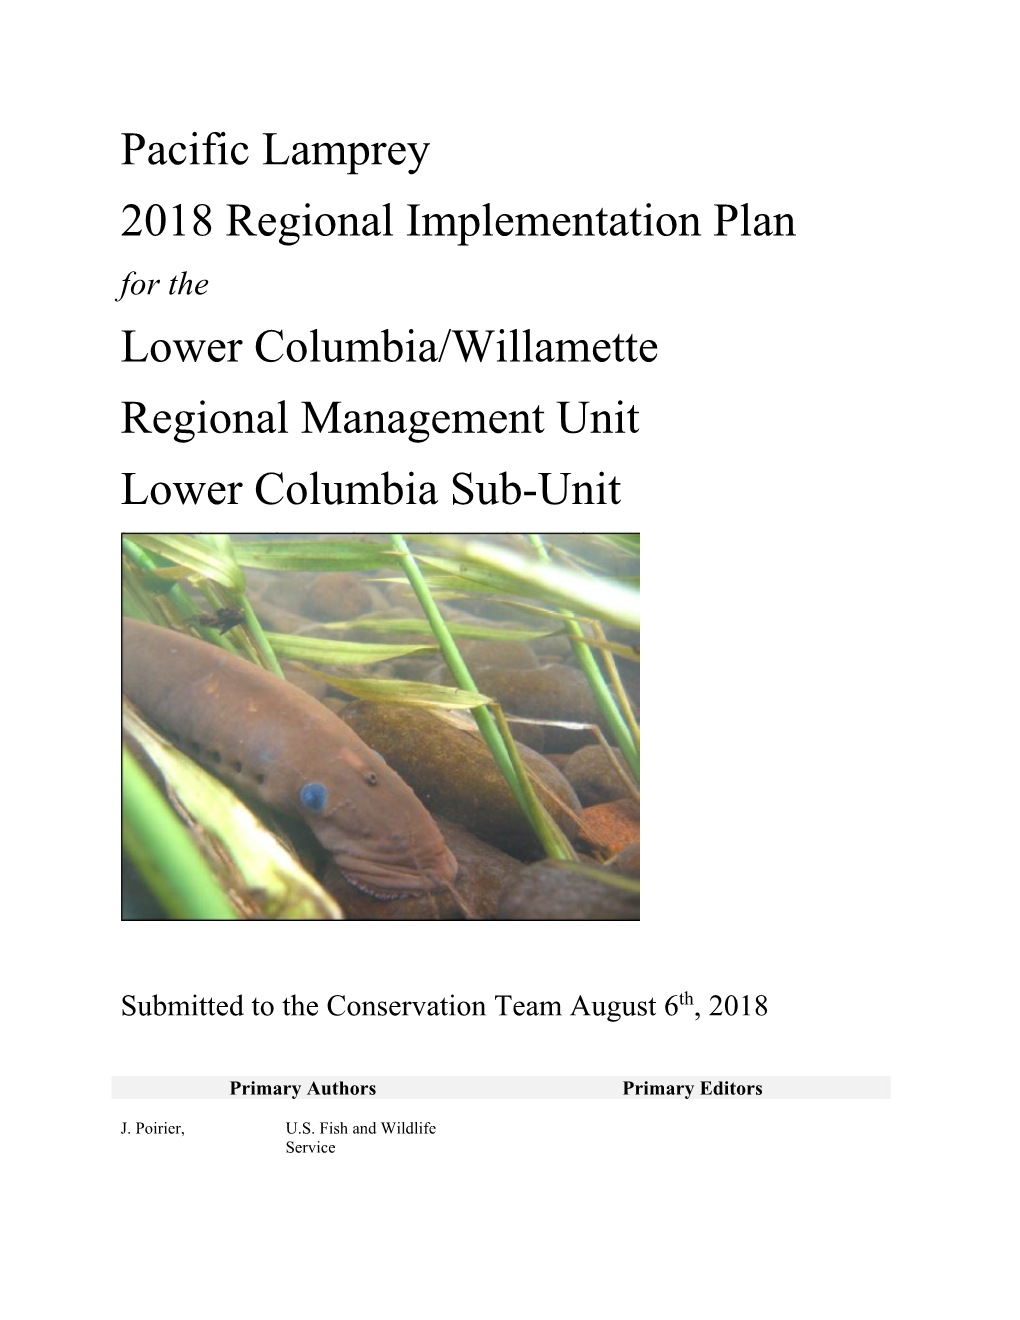 Pacific Lamprey 2018 Regional Implementation Plan for the Lower Columbia/Willamette Regional Management Unit Lower Columbia Sub-Unit